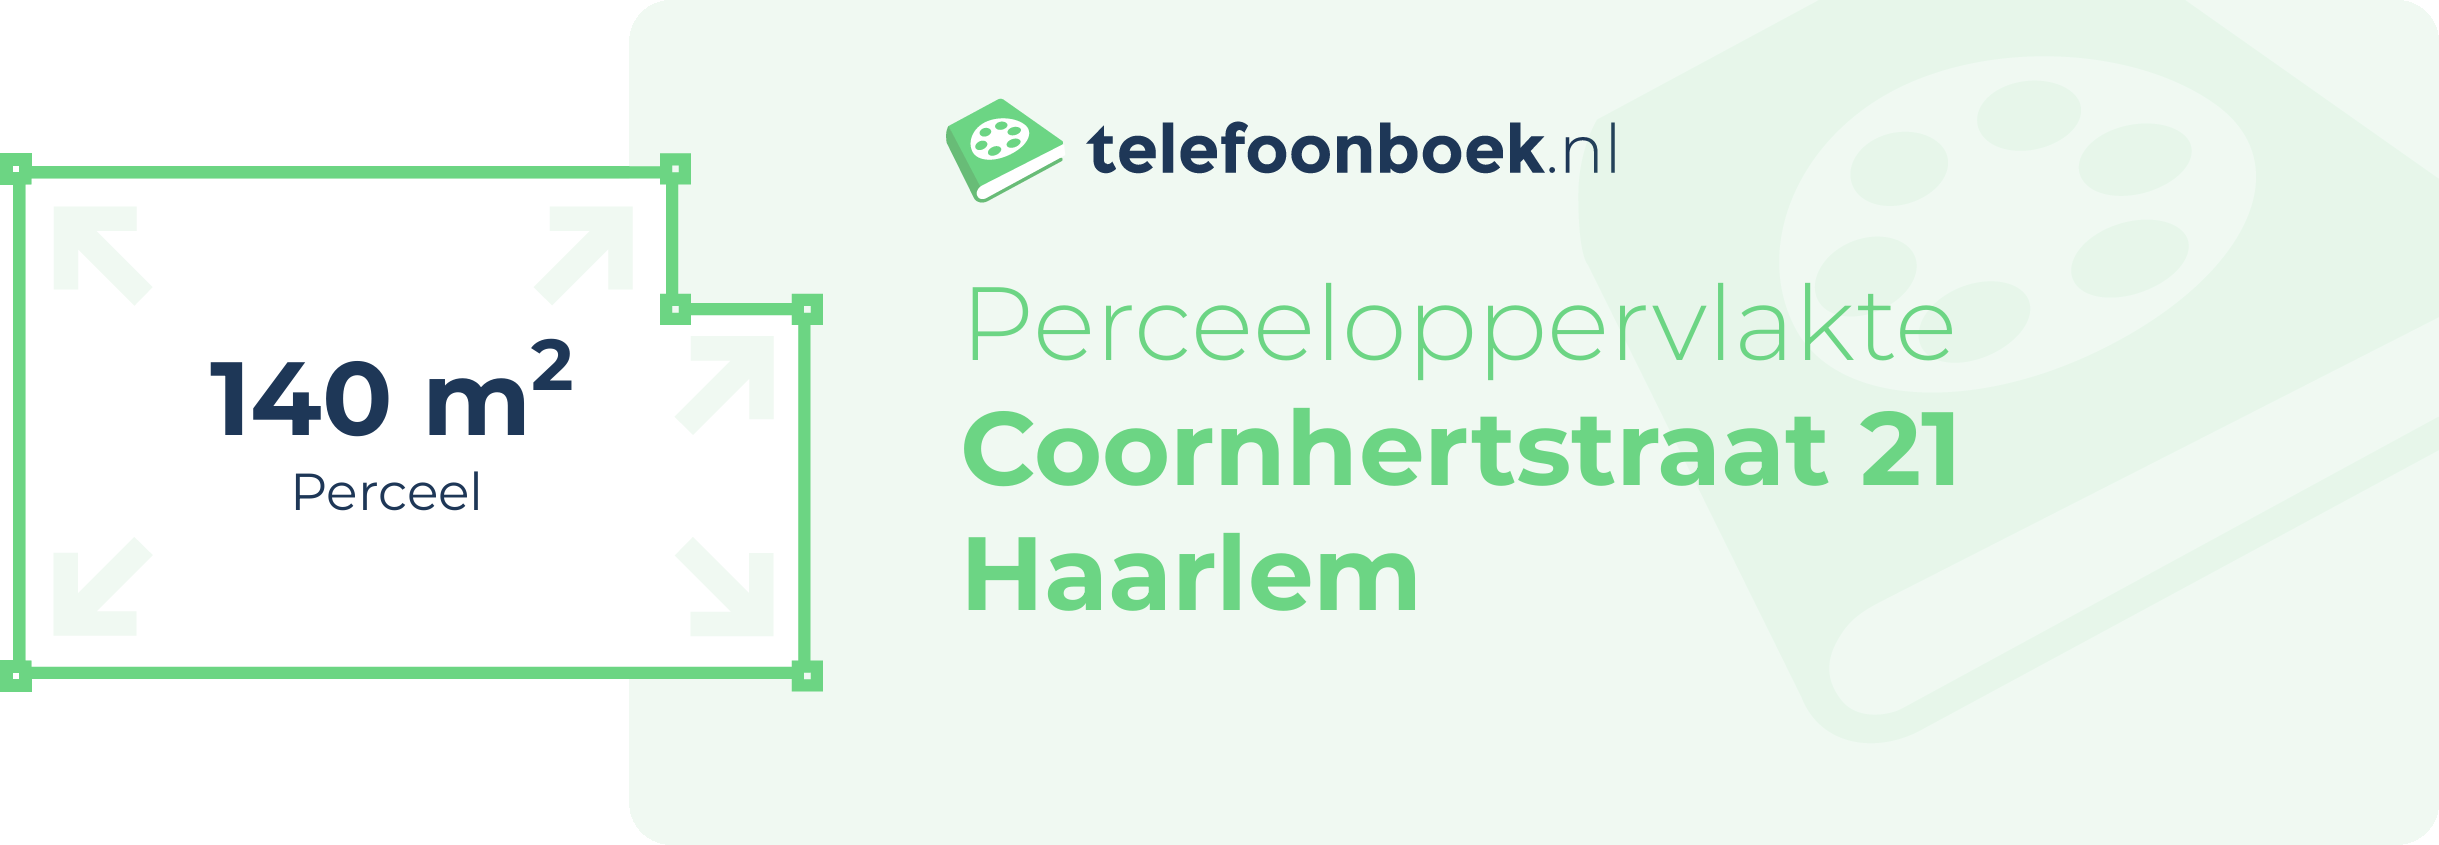 Perceeloppervlakte Coornhertstraat 21 Haarlem